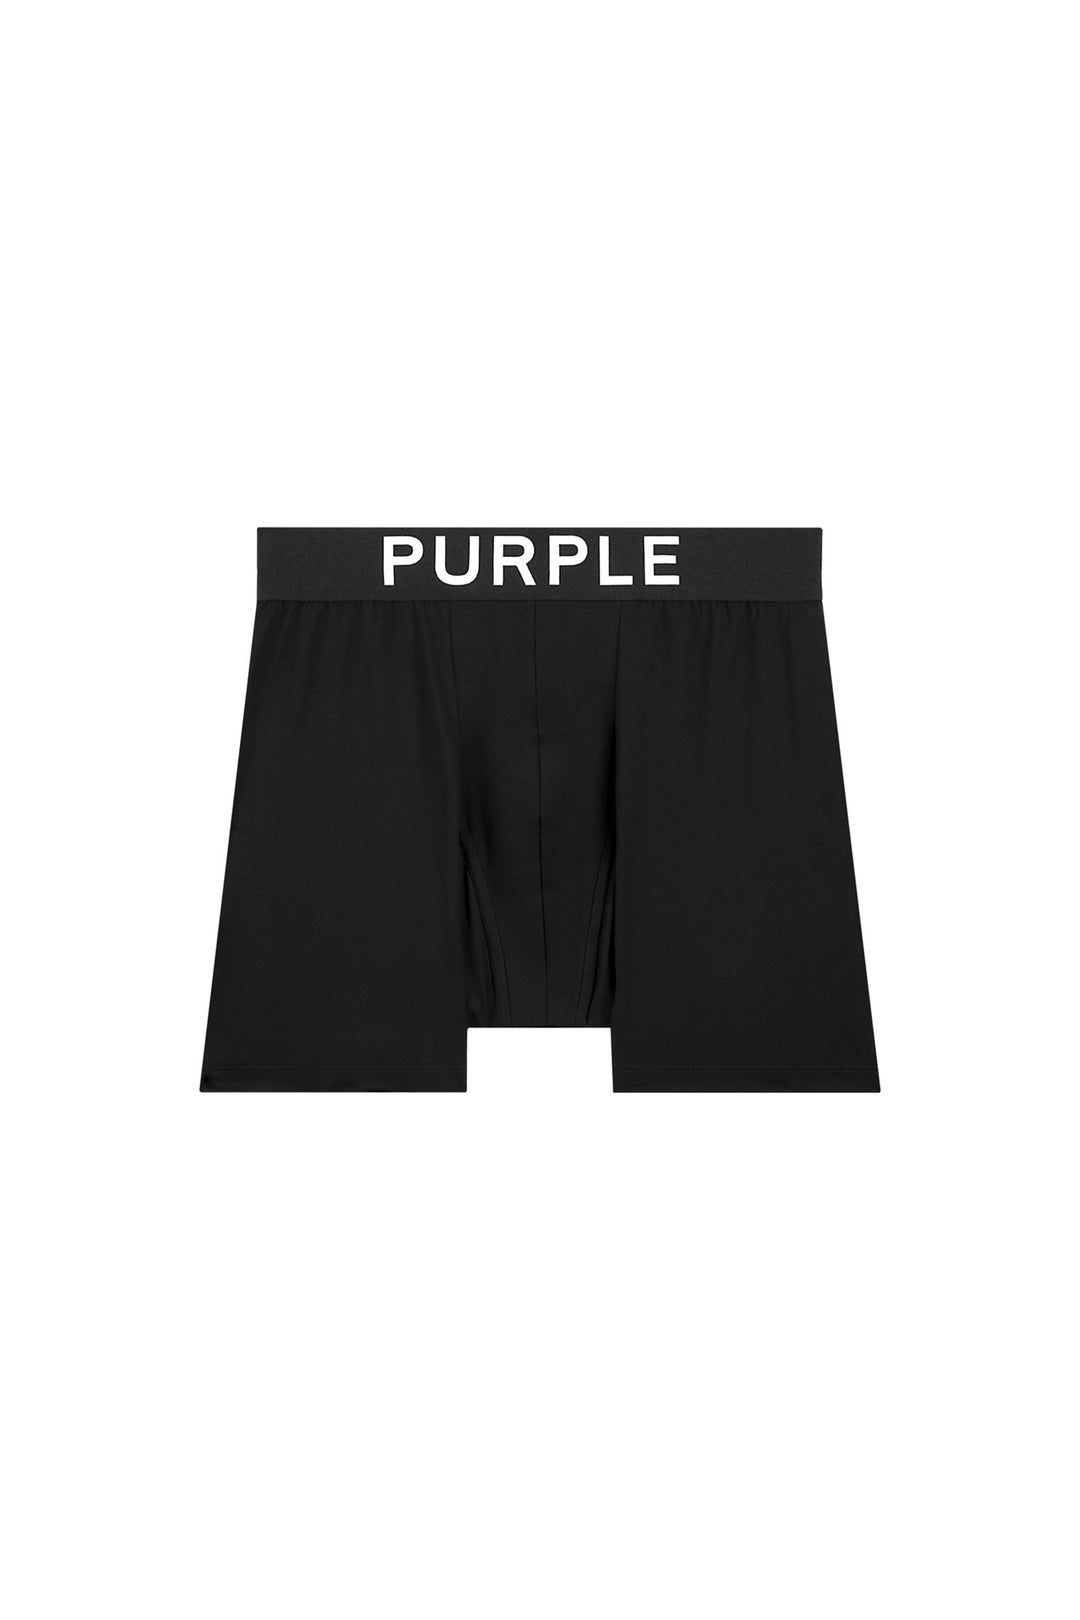 Purple Brand Boxer Briefs - Single Pack - Black